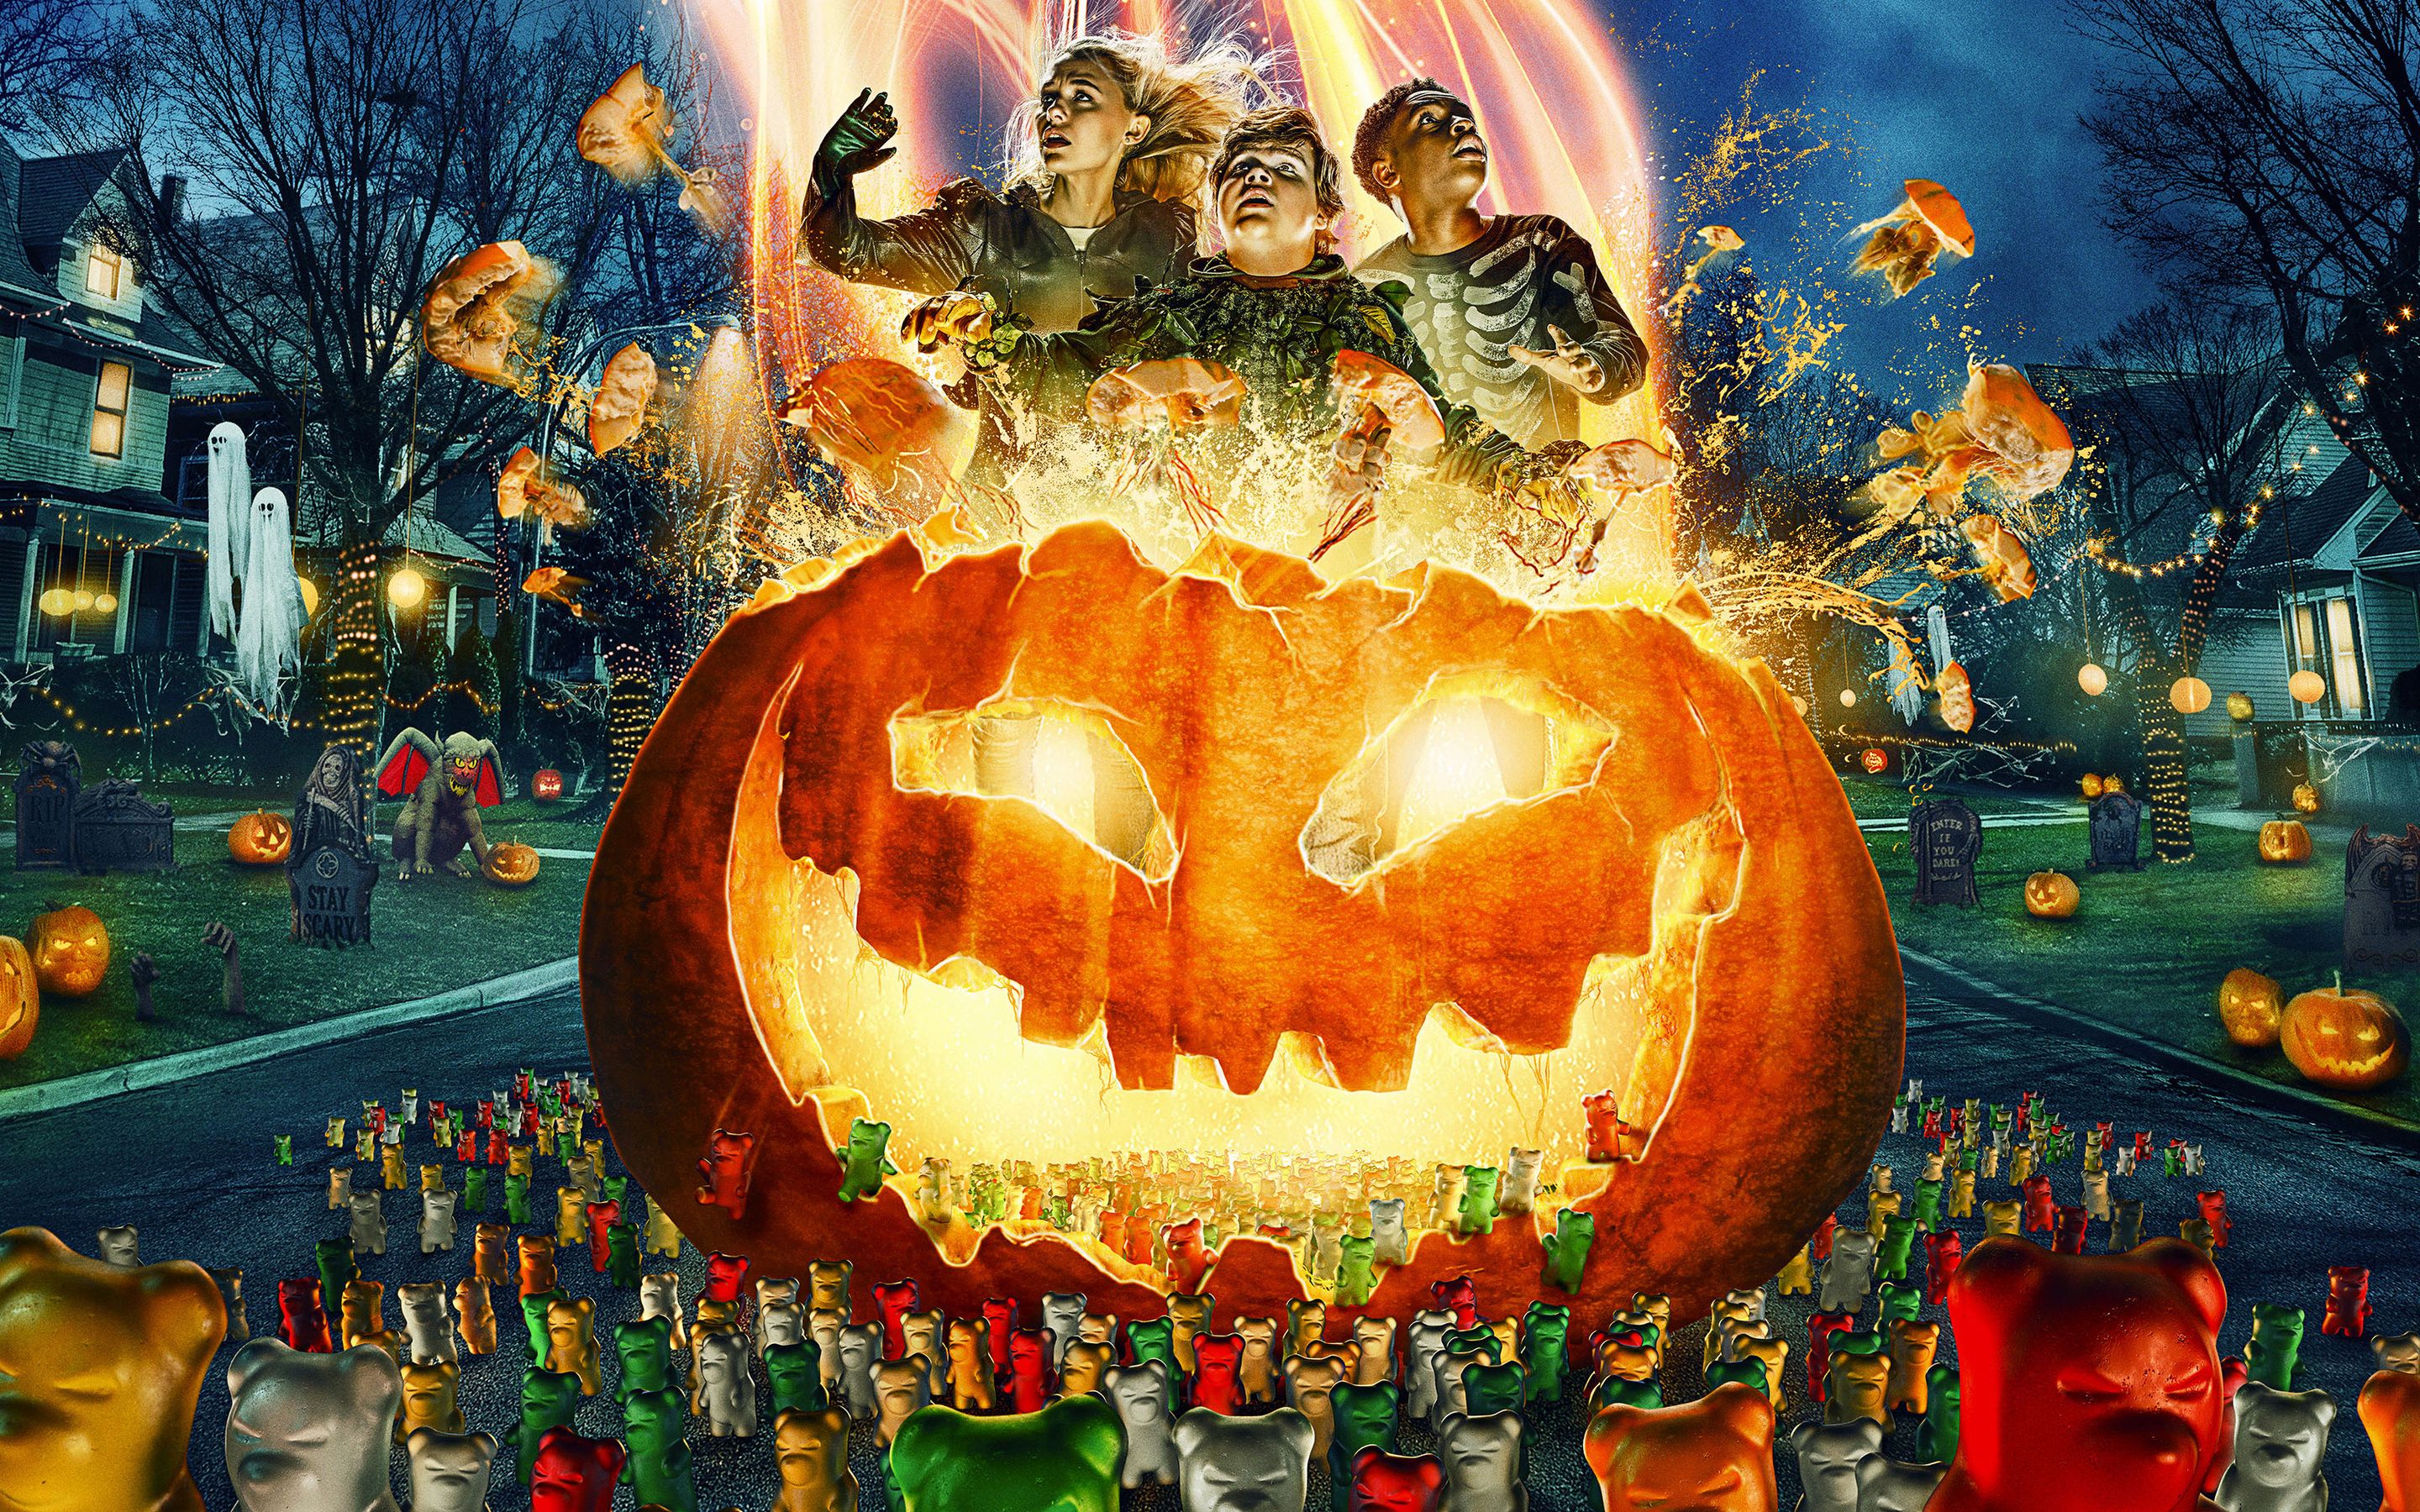 Goosebumps 2 Haunted Halloween 4k Macbook Pro Retina HD 4k Wallpaper, Image, Background, Photo and Picture